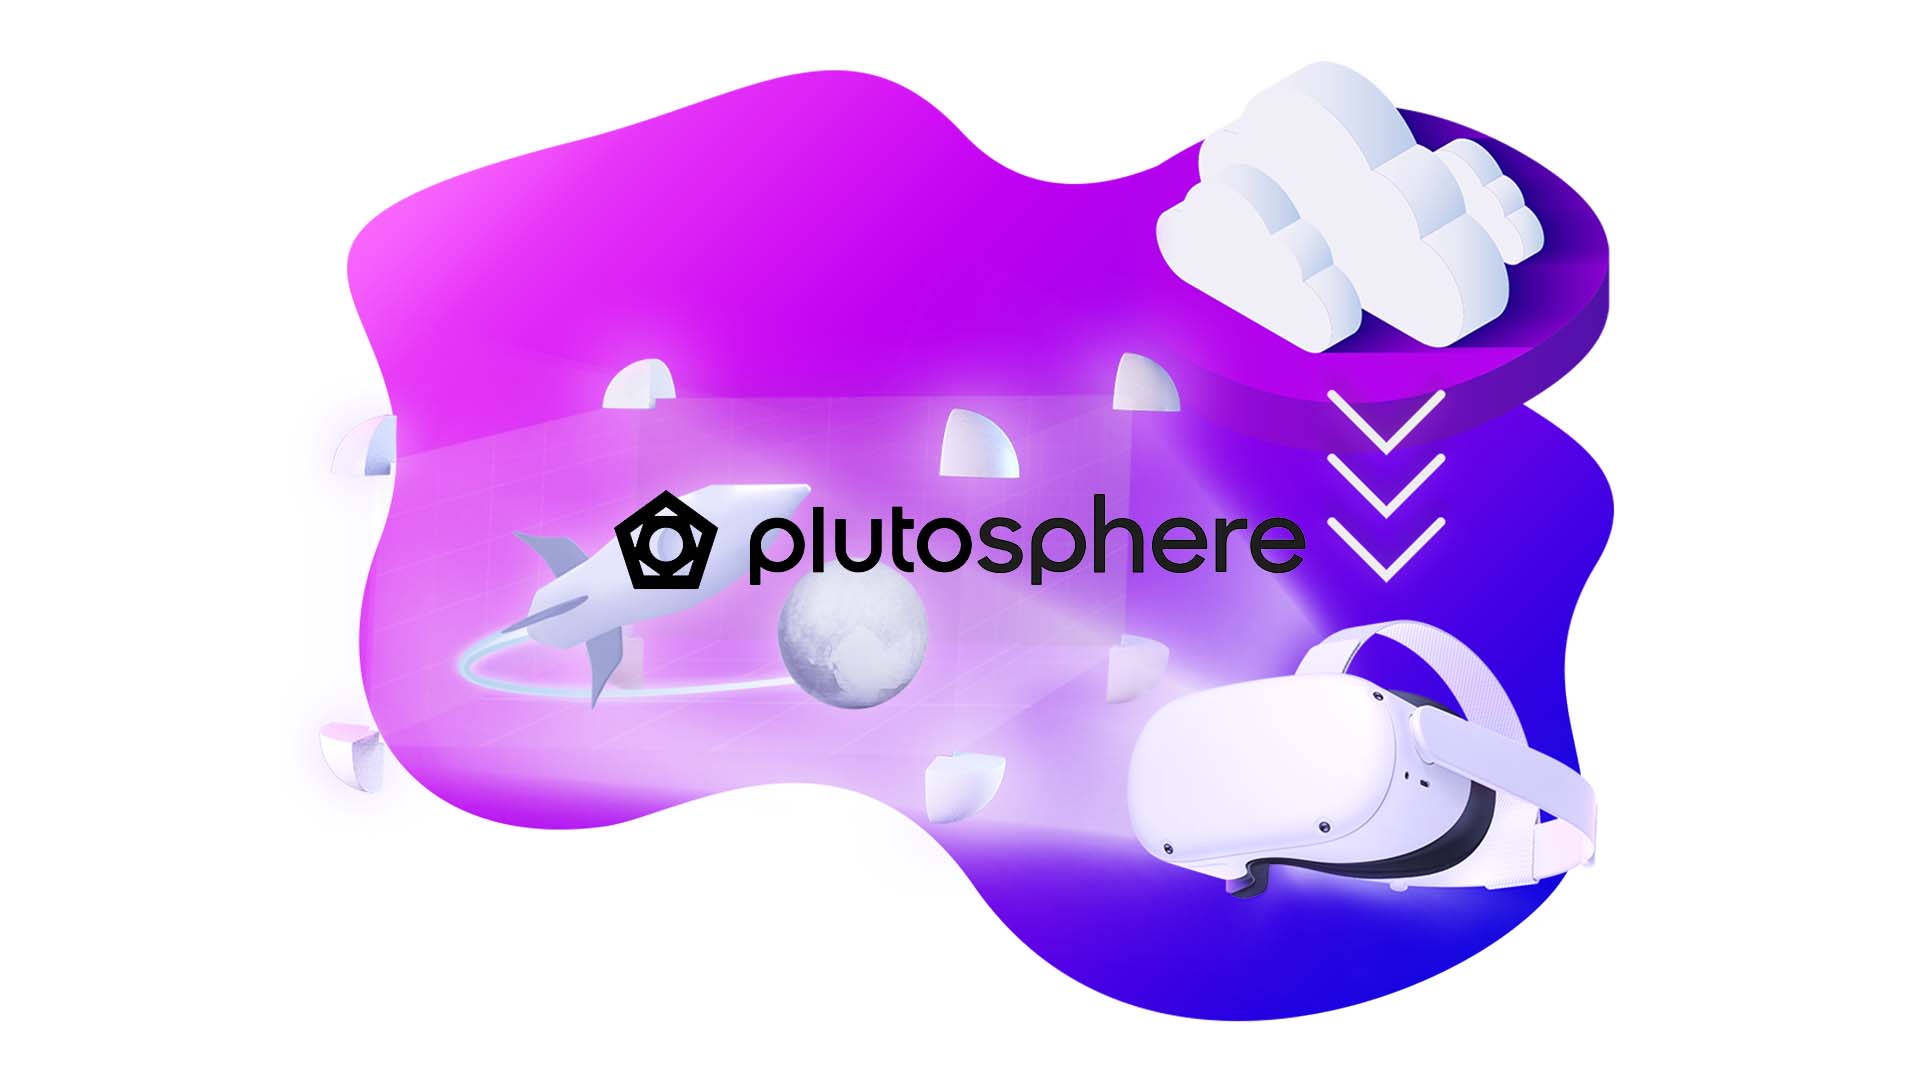 Plutosphere Key Image